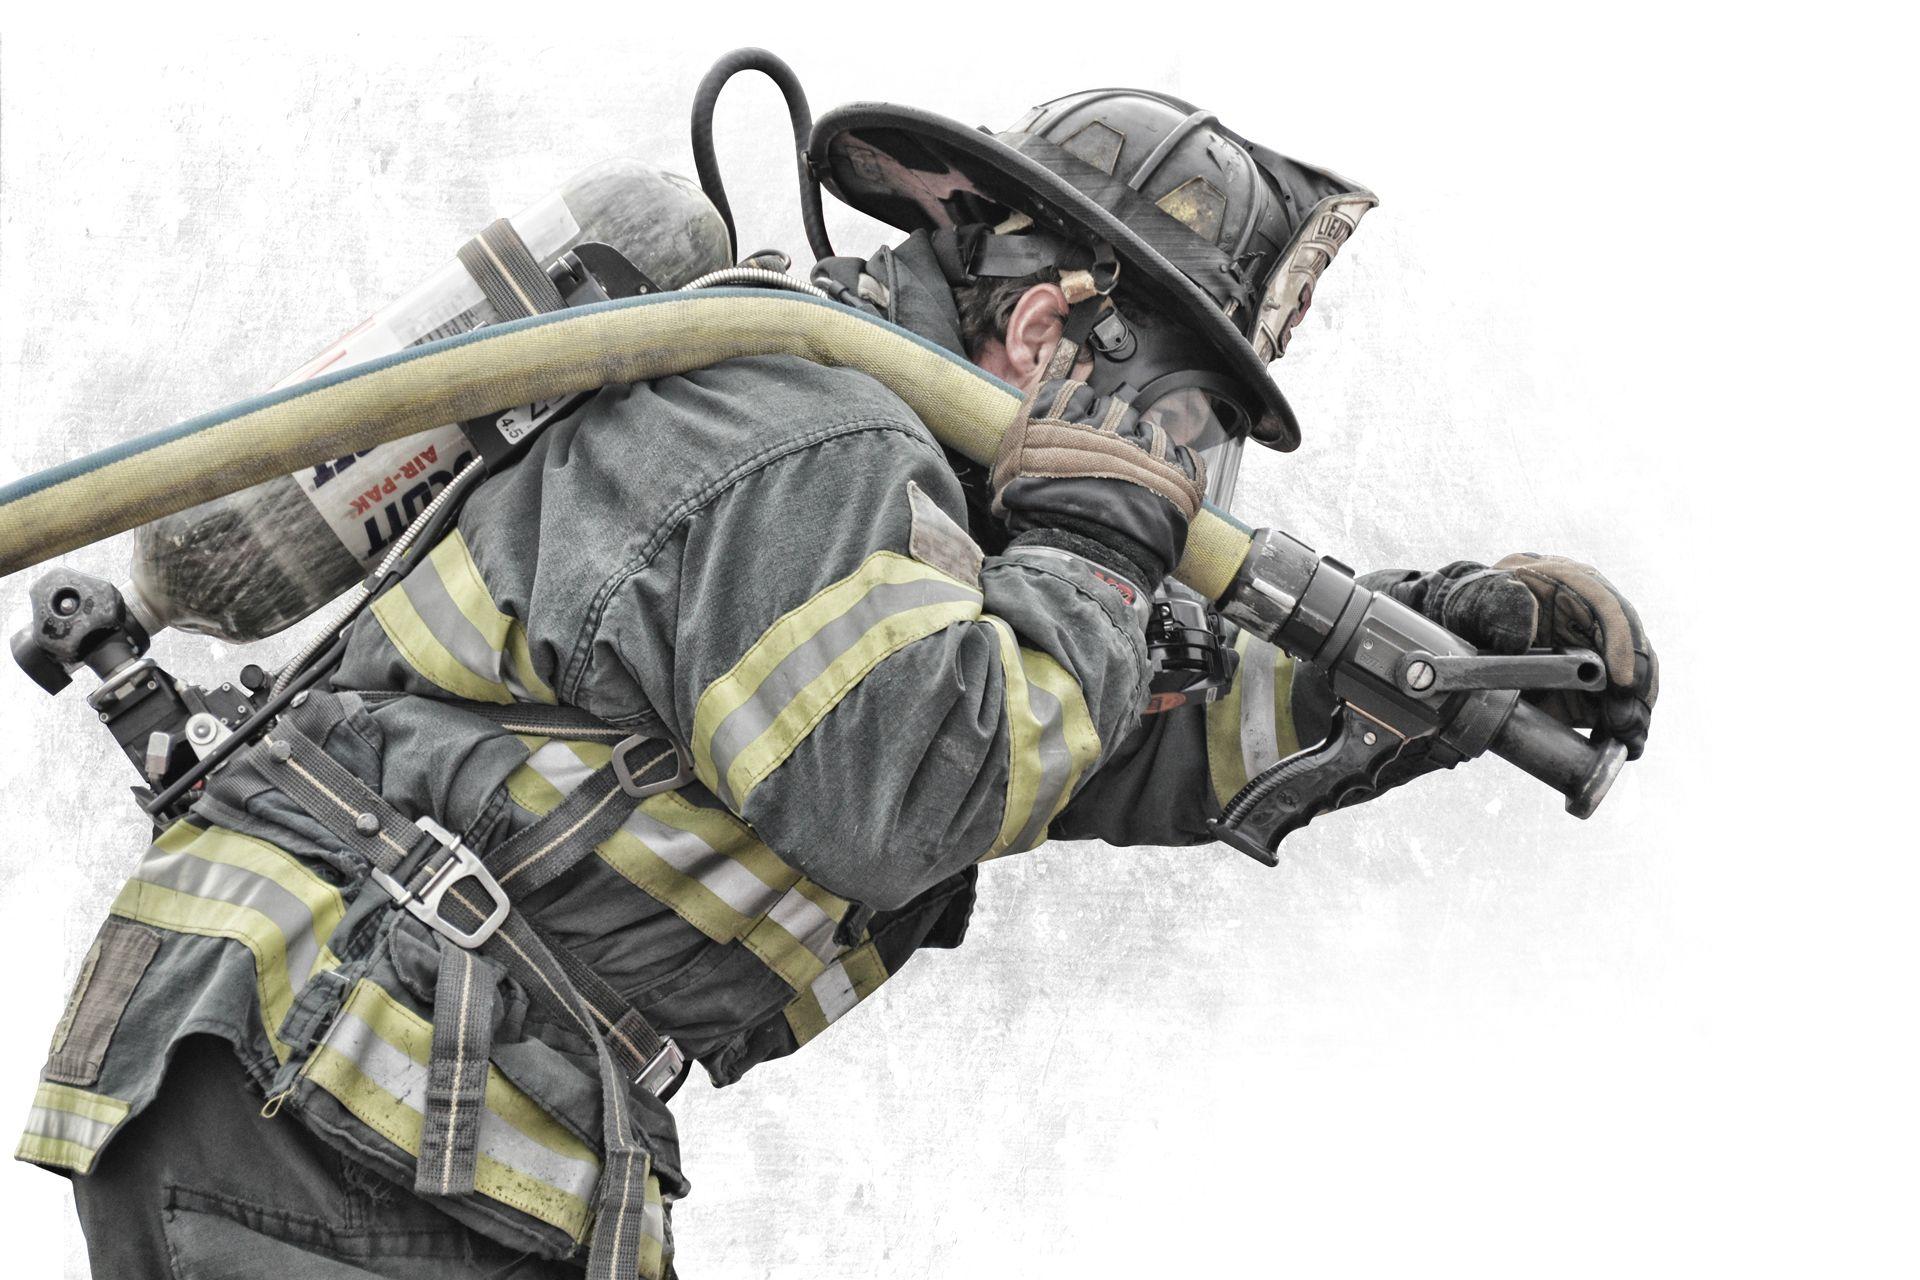 Free Firefighter Wallpaper for Phone 1920×1280 Firefighting